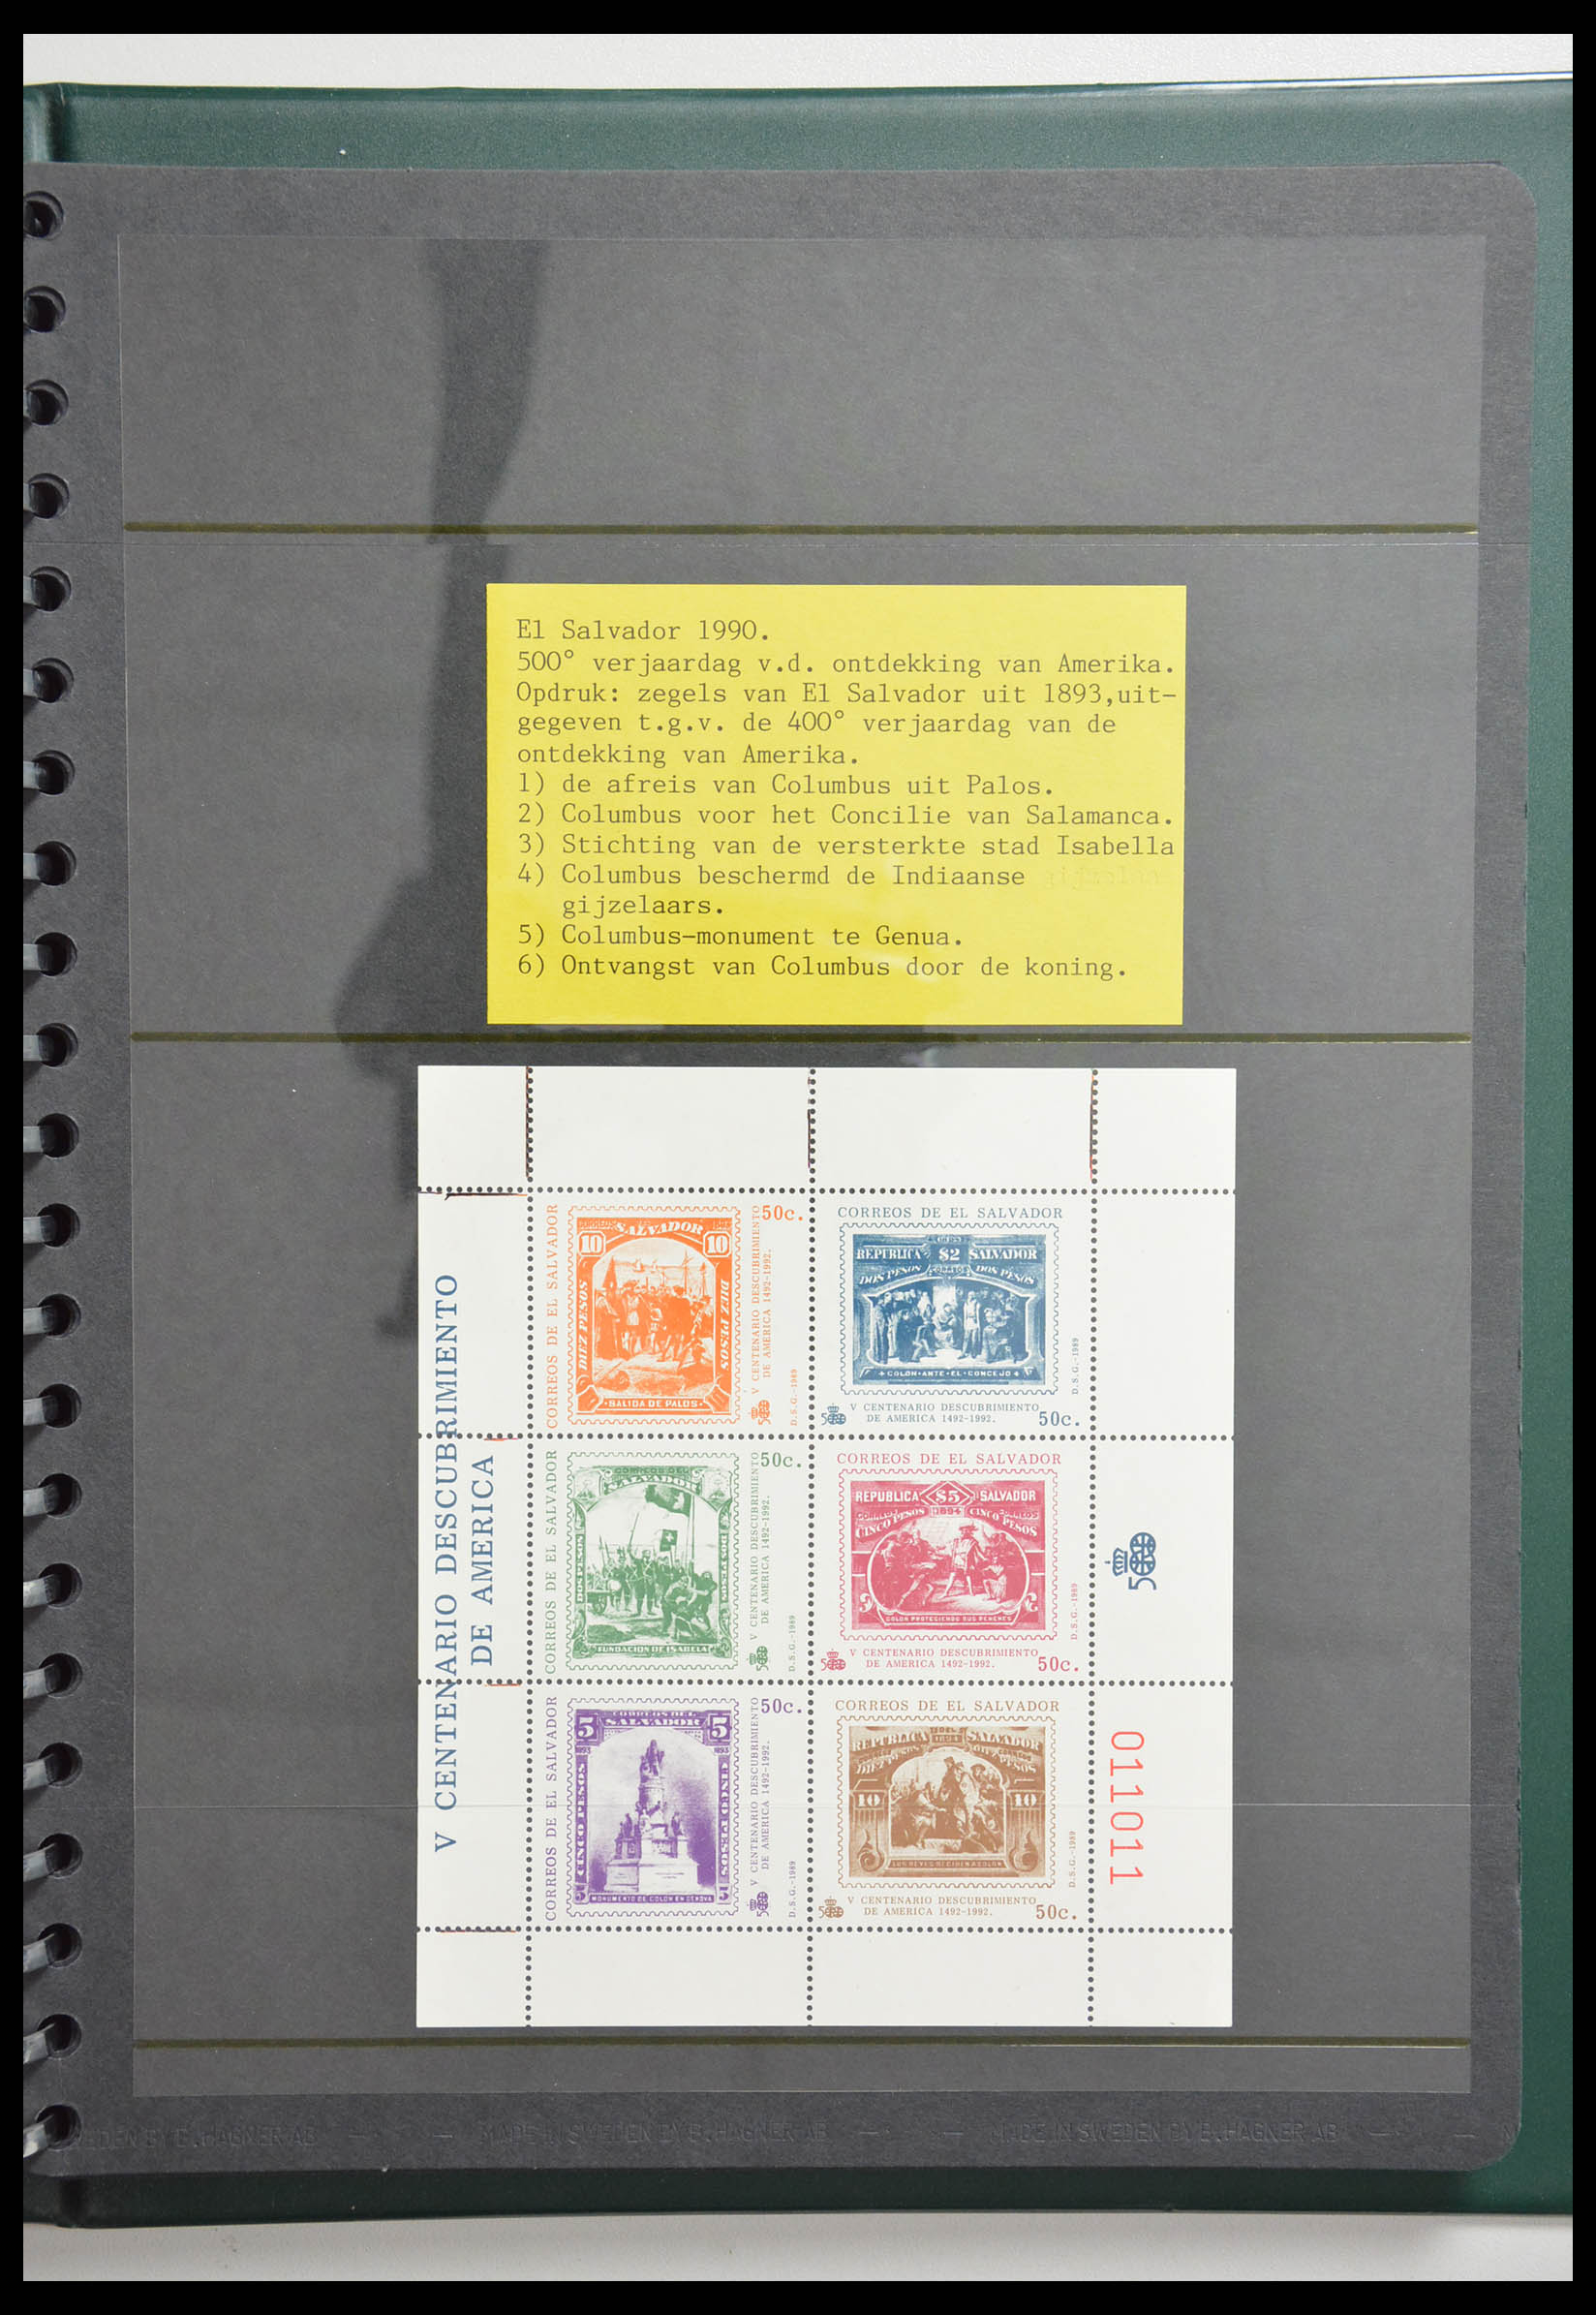 28337 031 - 28337 Postzegel op postzegel 1840-2001.